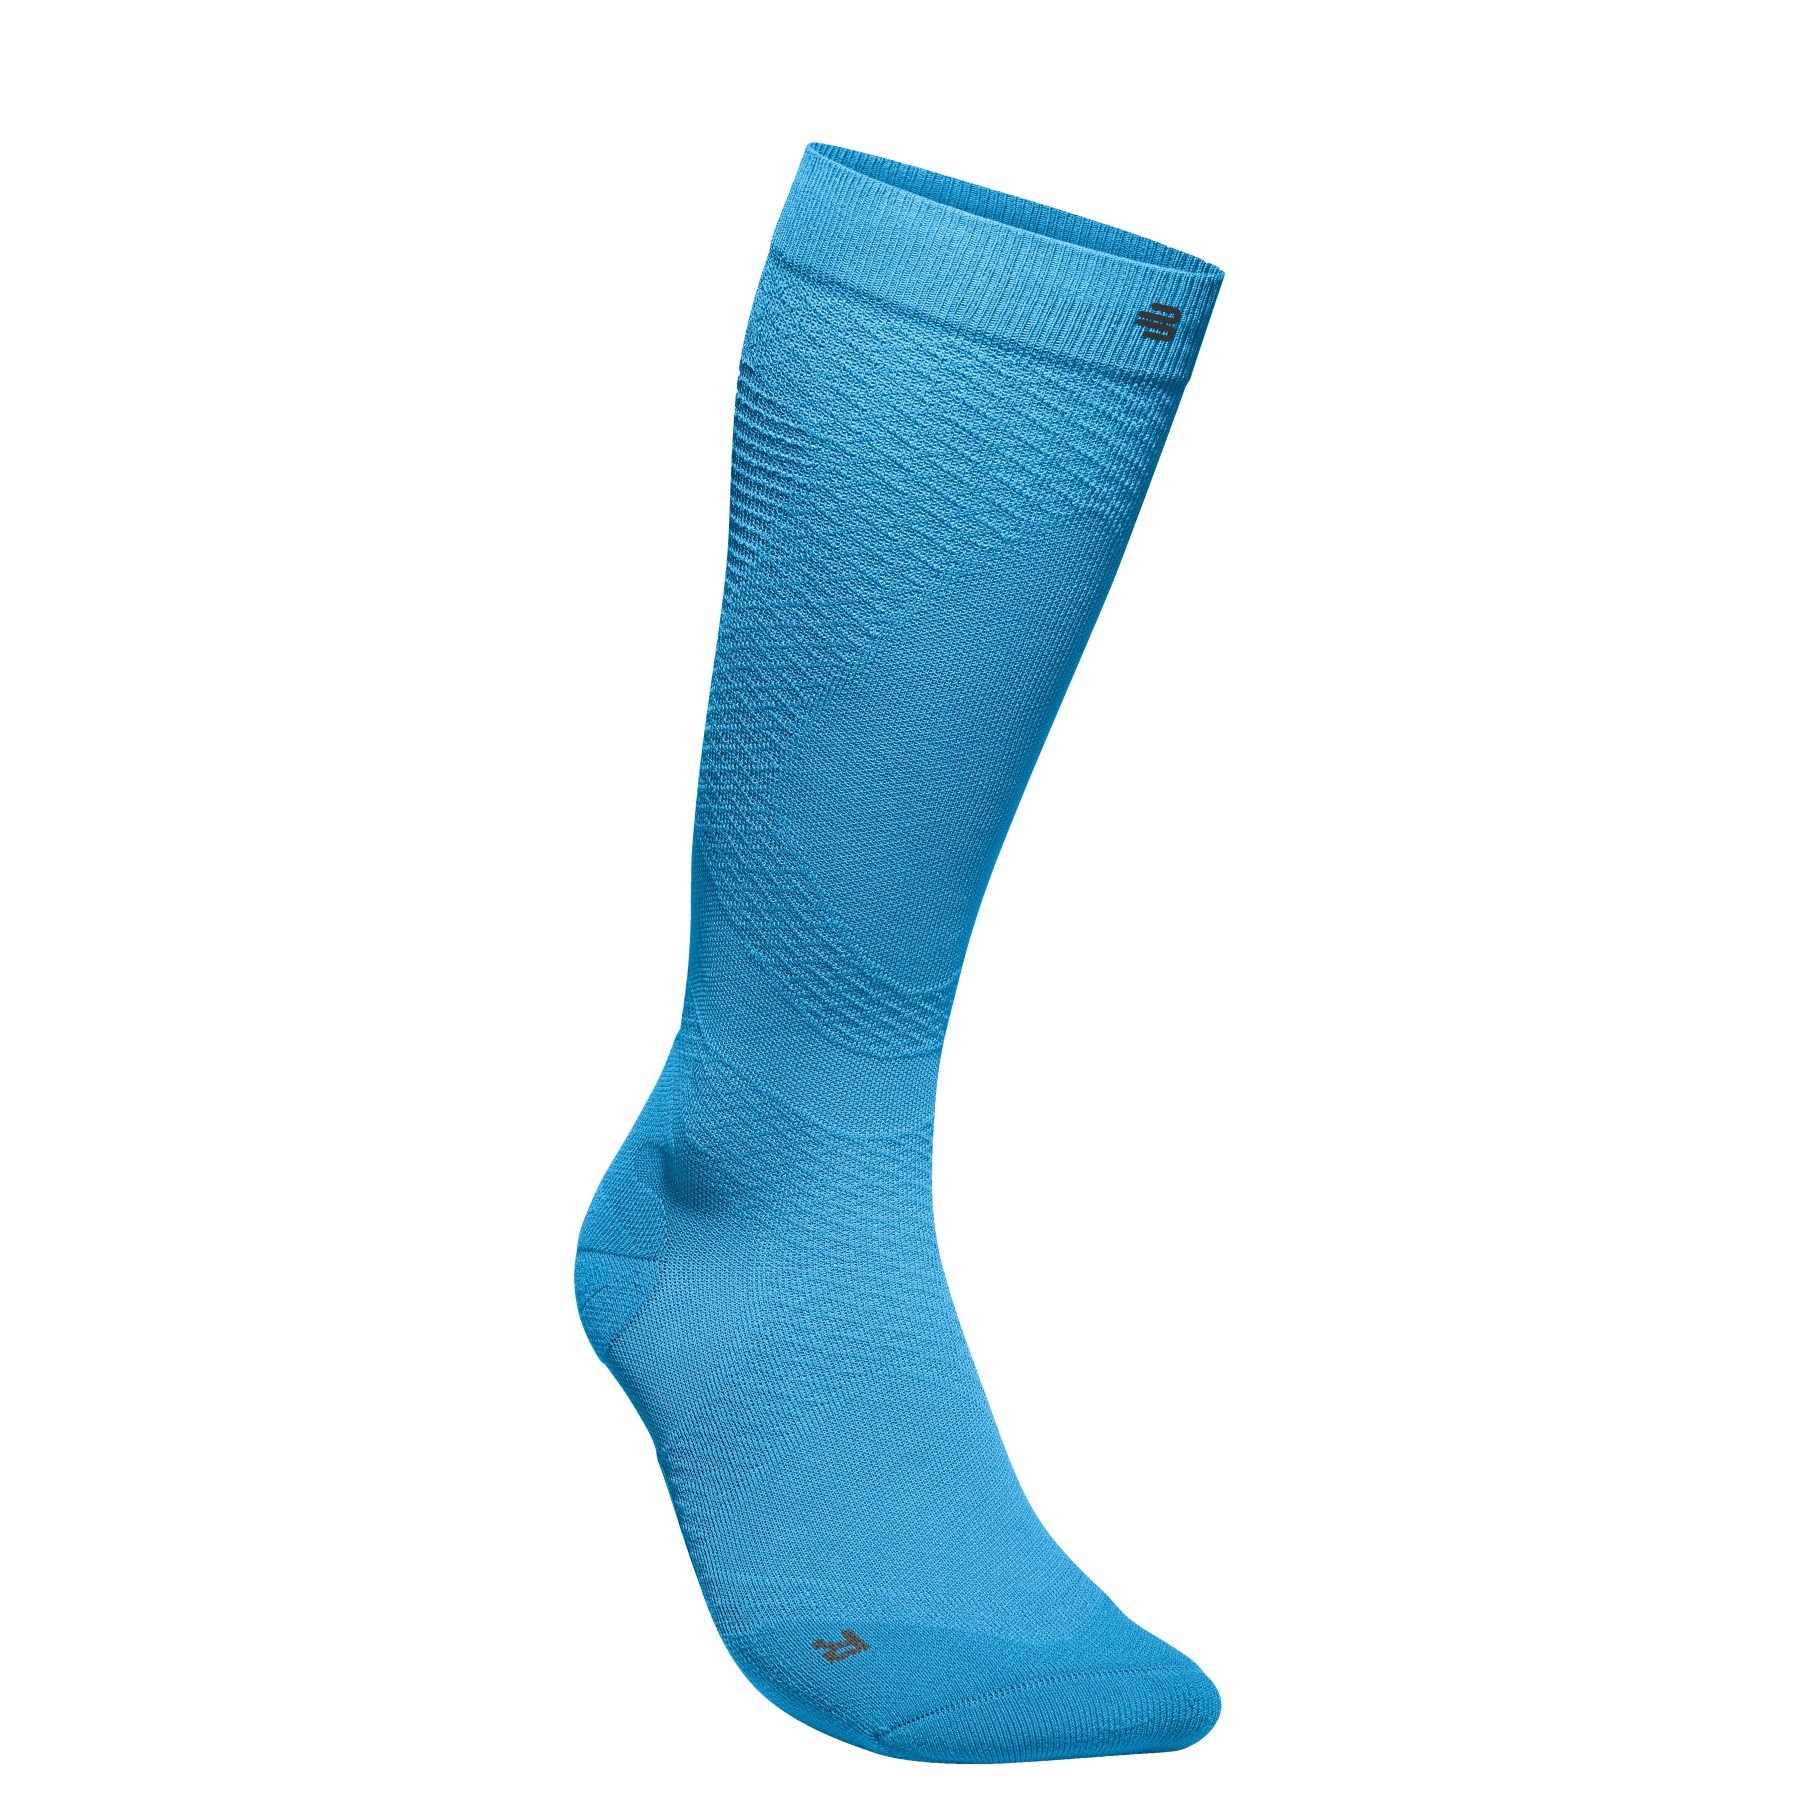 Picture of Bauerfeind Run Ultralight Compression Socks Women - lagoon blue - L (41-46 cm)